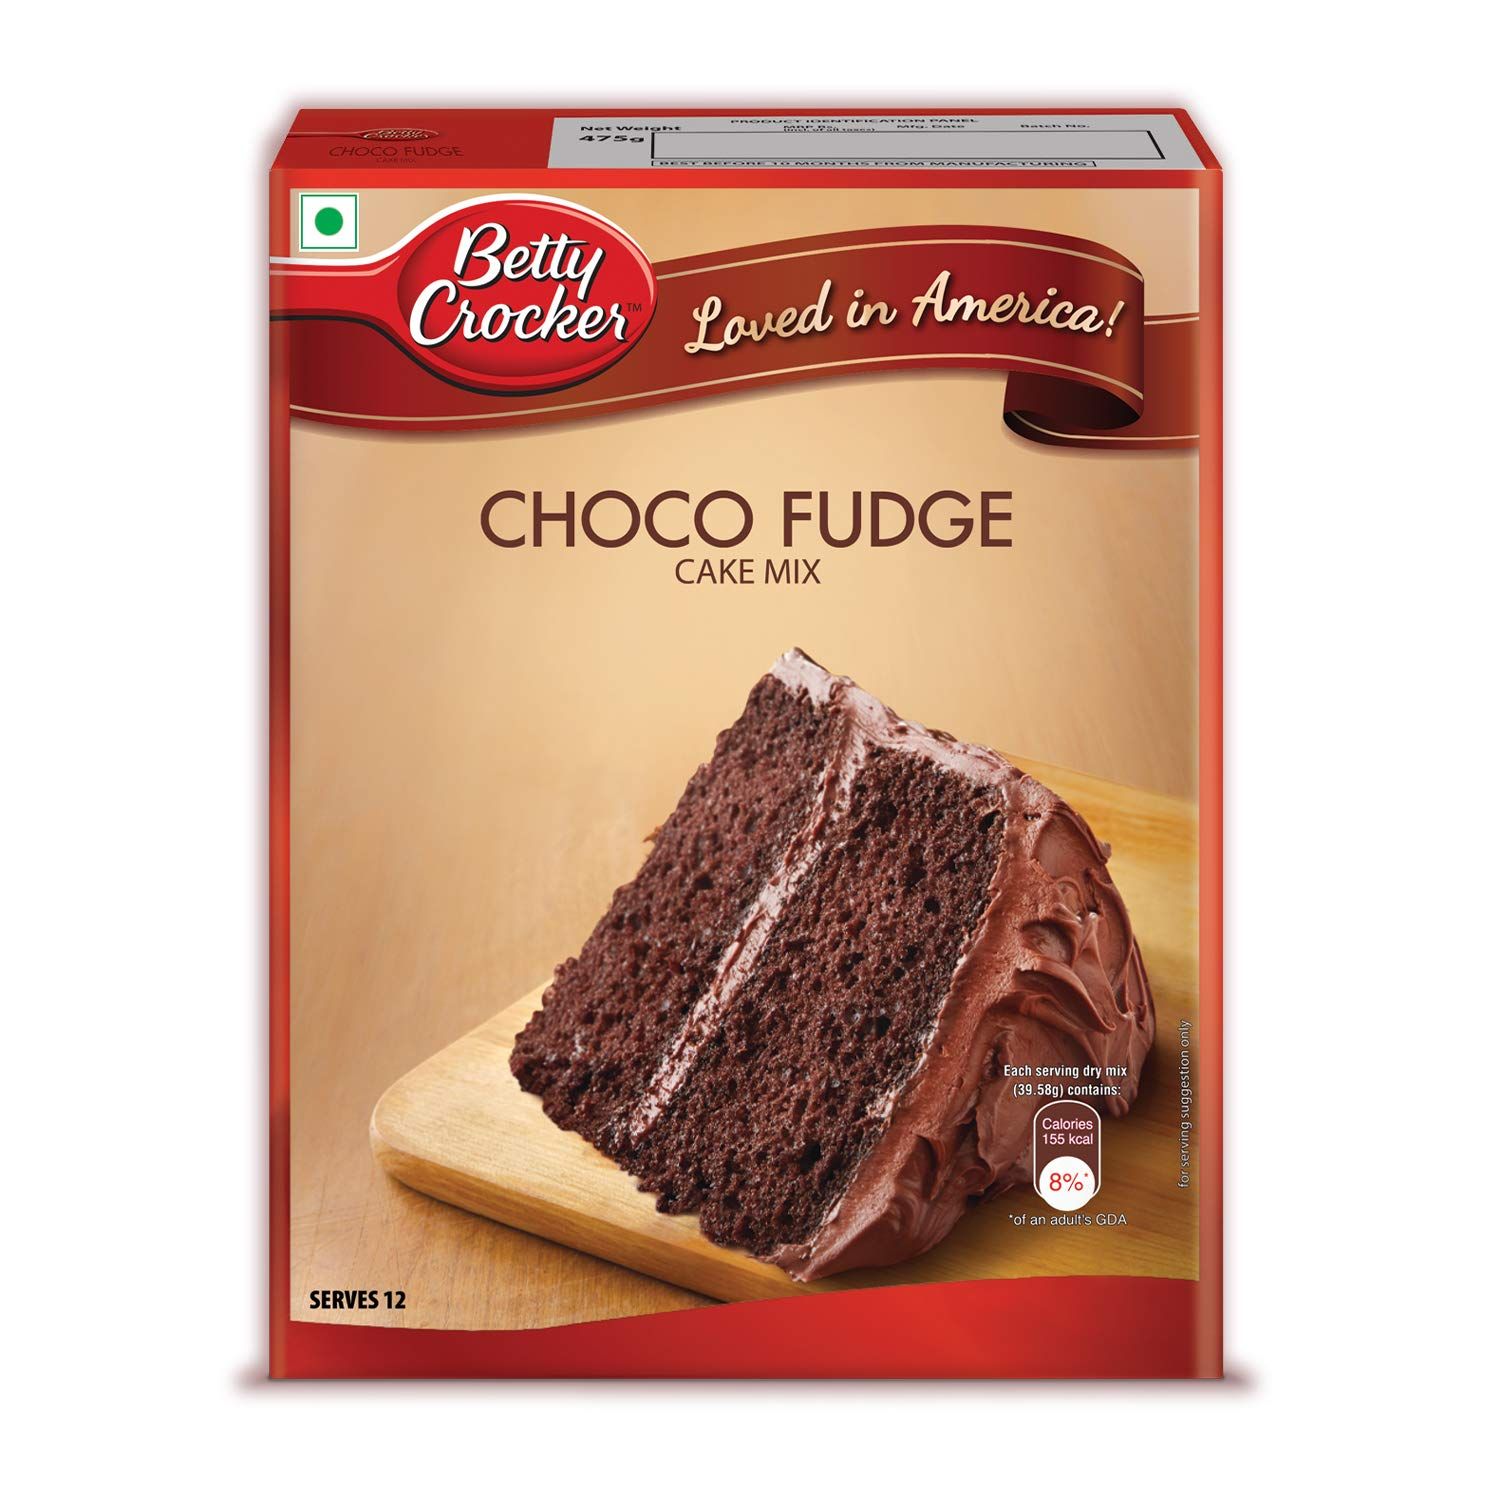 Betty Crocker Choco Fudge Cake Mix Image